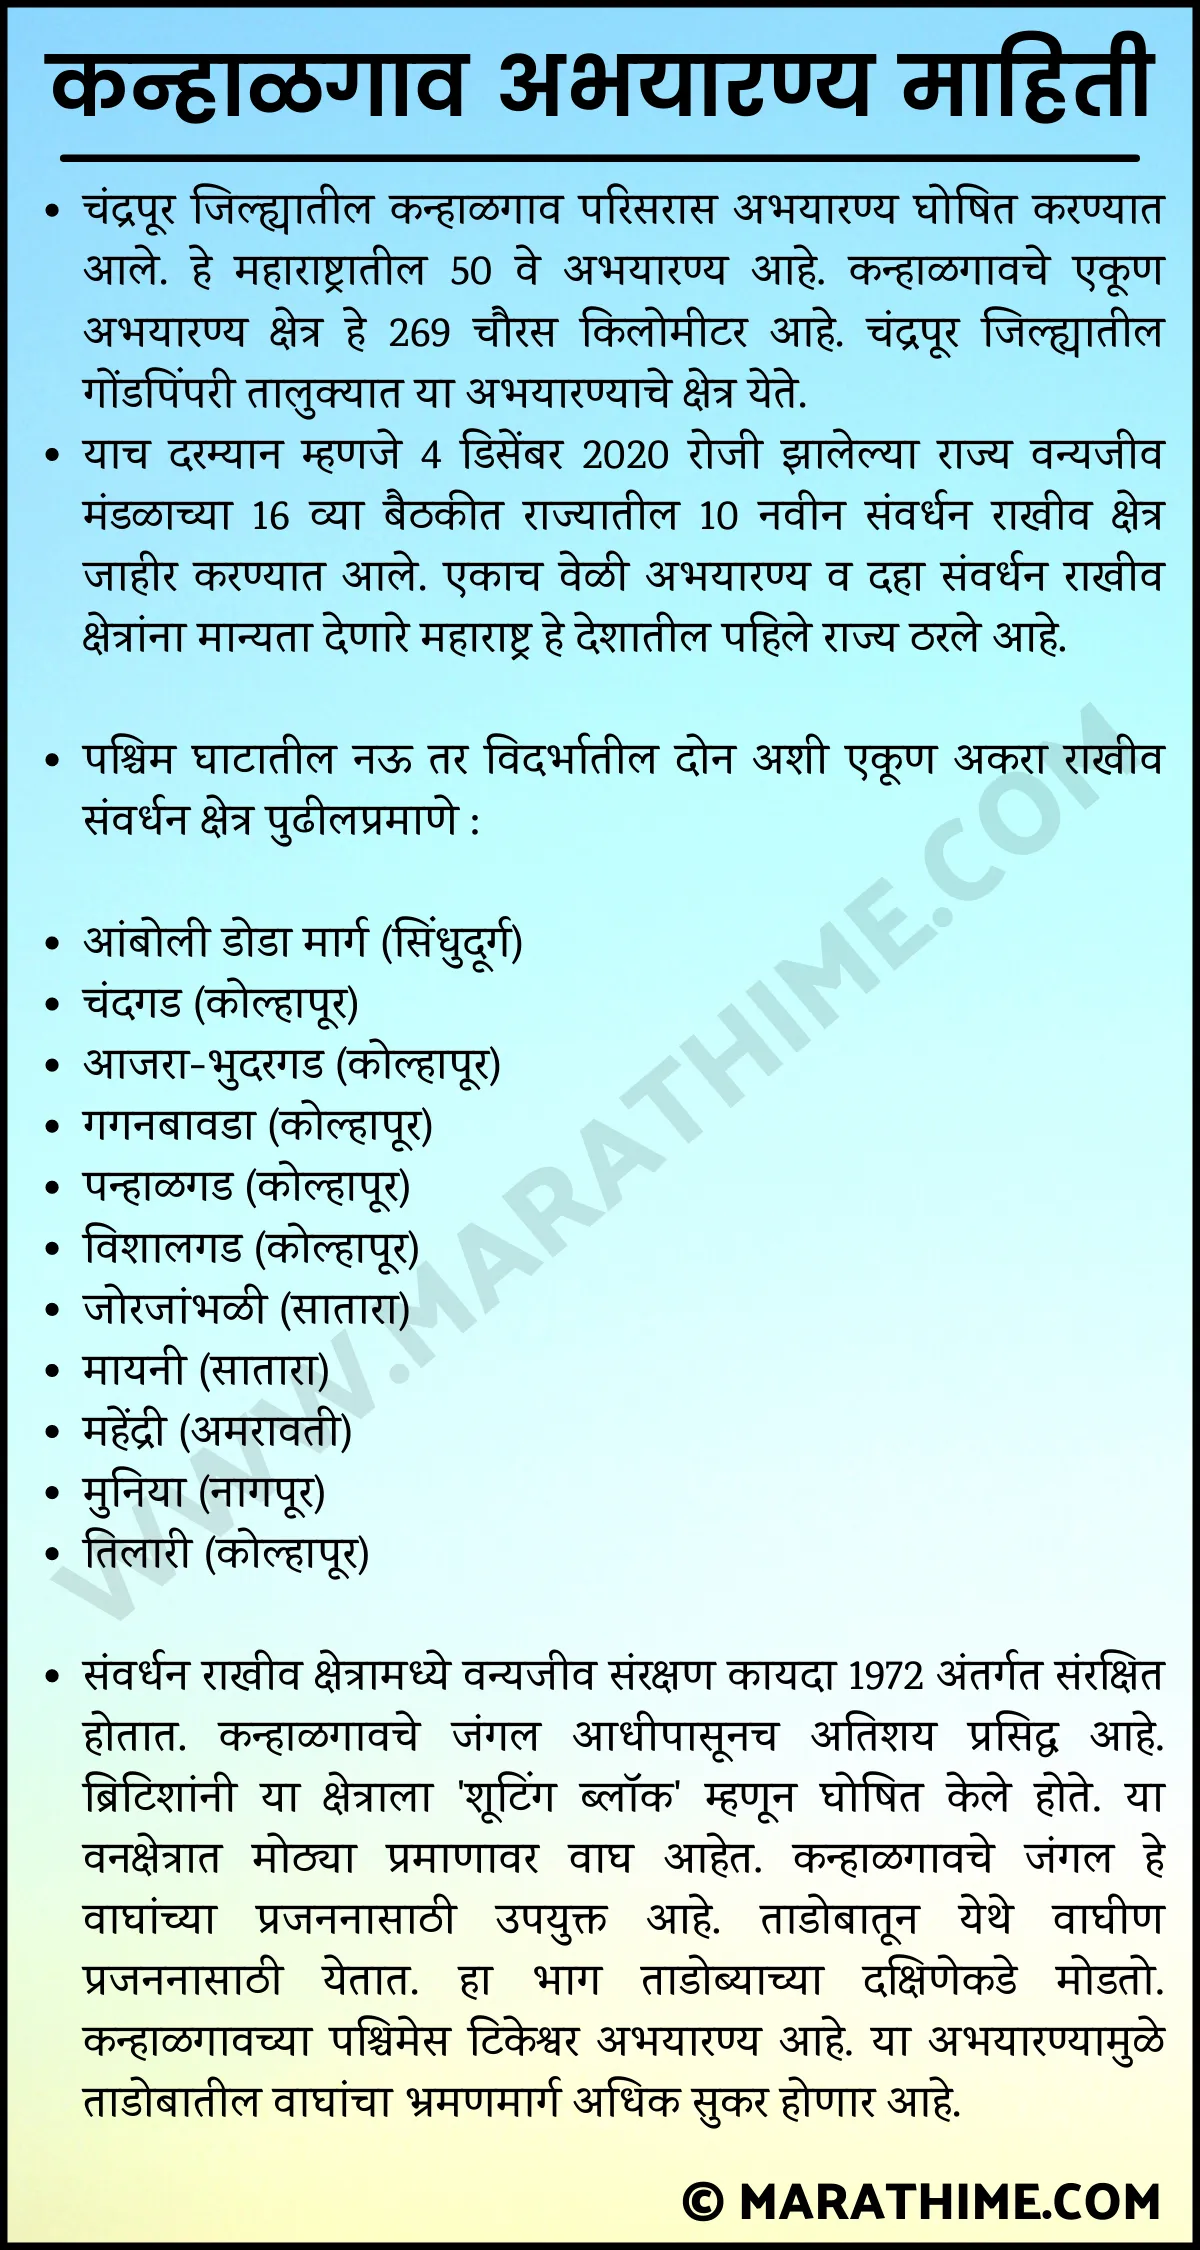 कन्हाळगाव अभयारण्य माहिती-Kanhalgaon Abhayaranya Information in Marathi